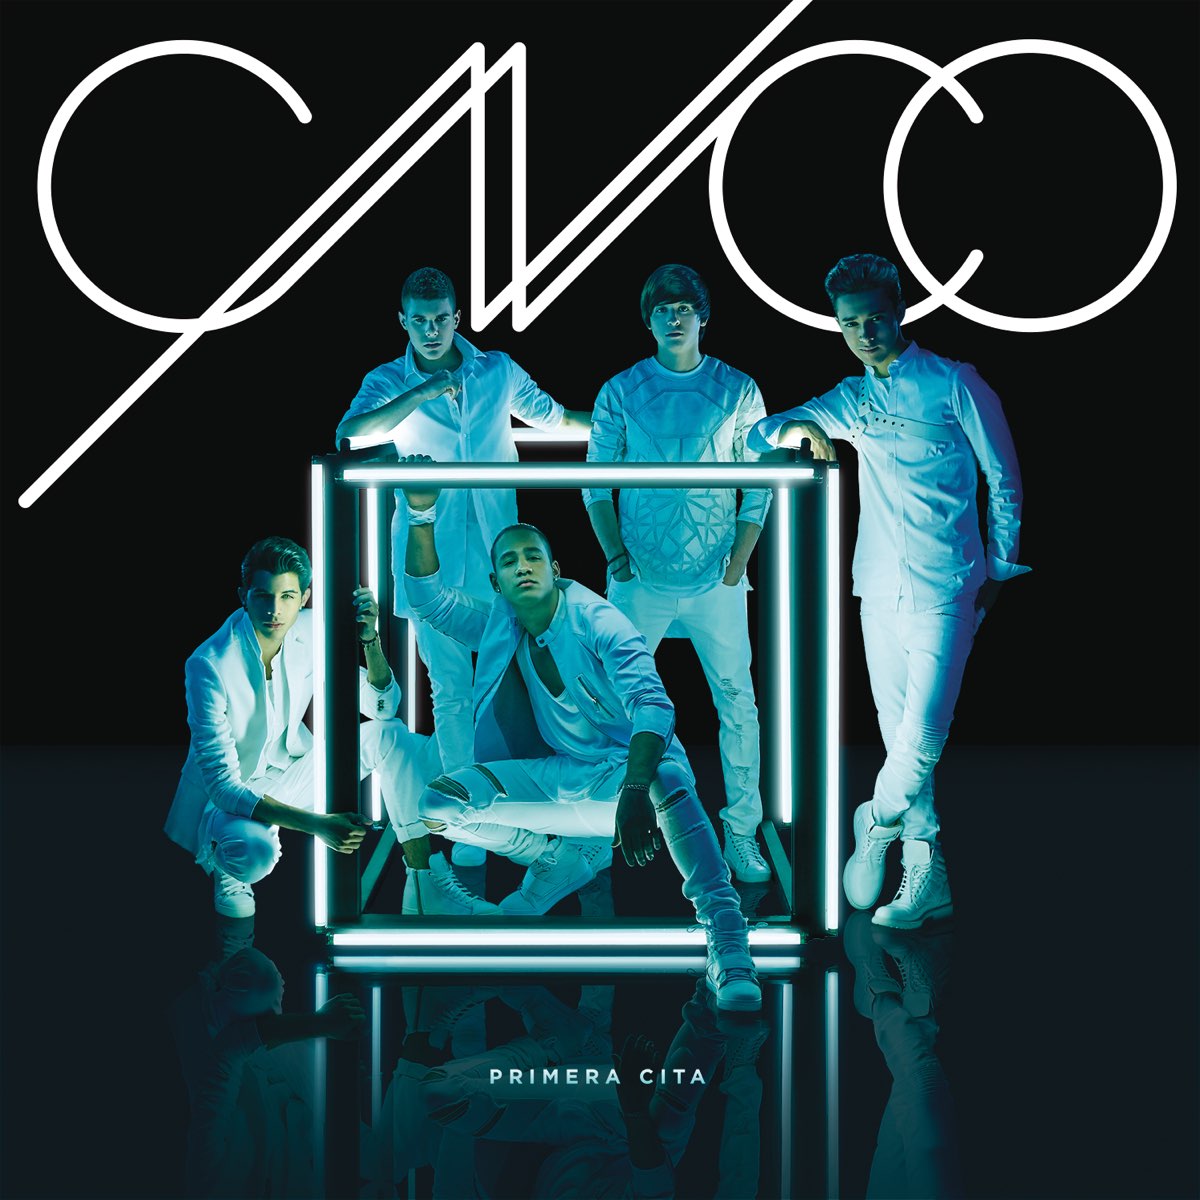 Primera Cita by CNCO on Apple Music